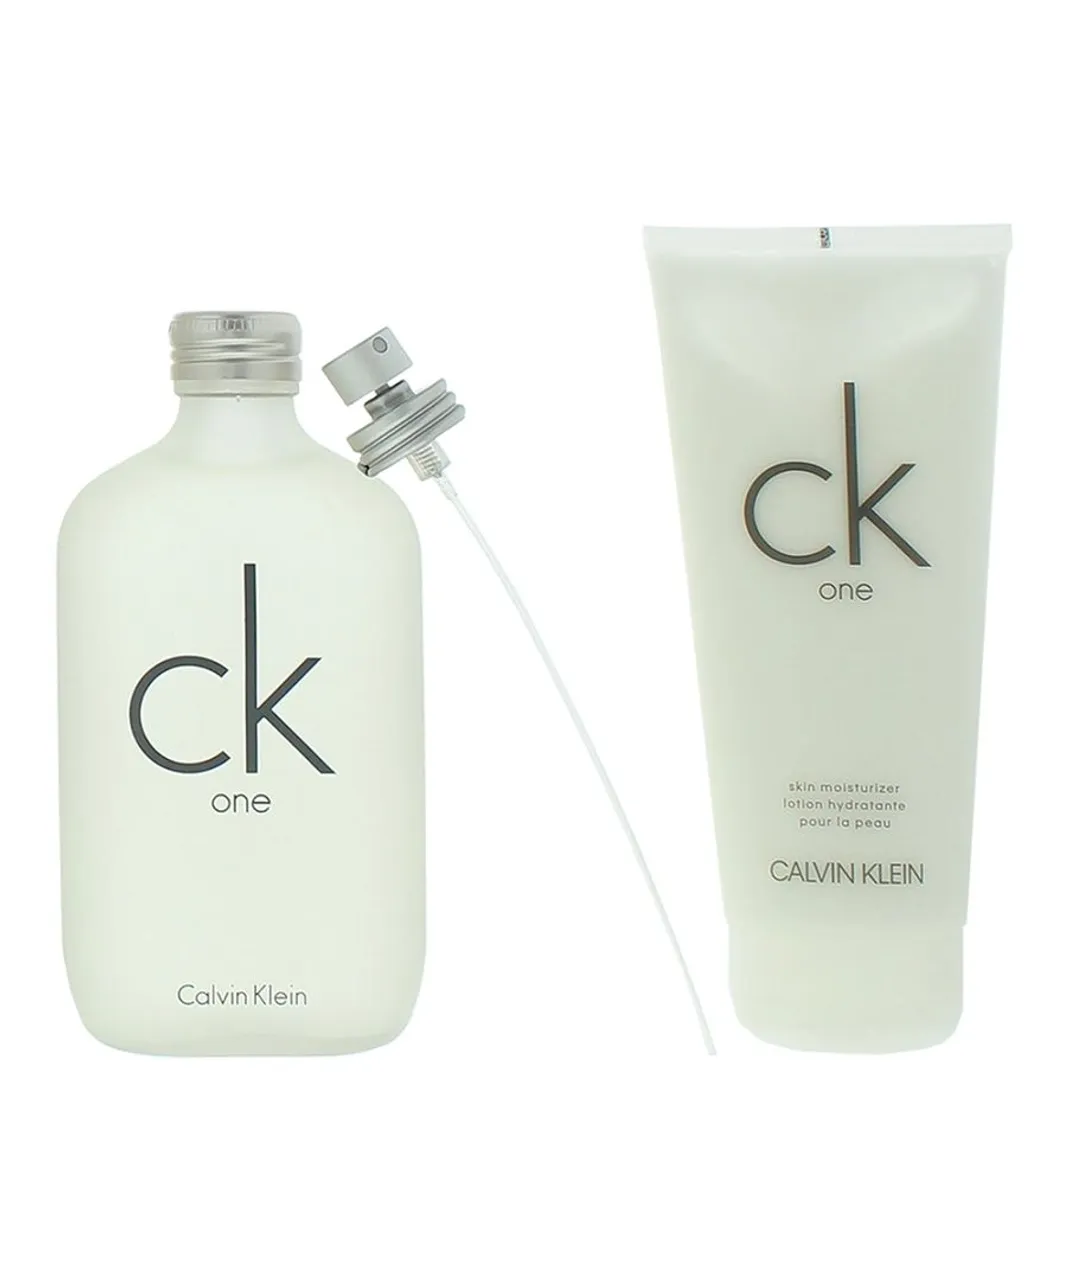 Calvin Klein Unisex Ck One Eau De Toilette 200ml + Body Lotion Gift Set - Green - One Size